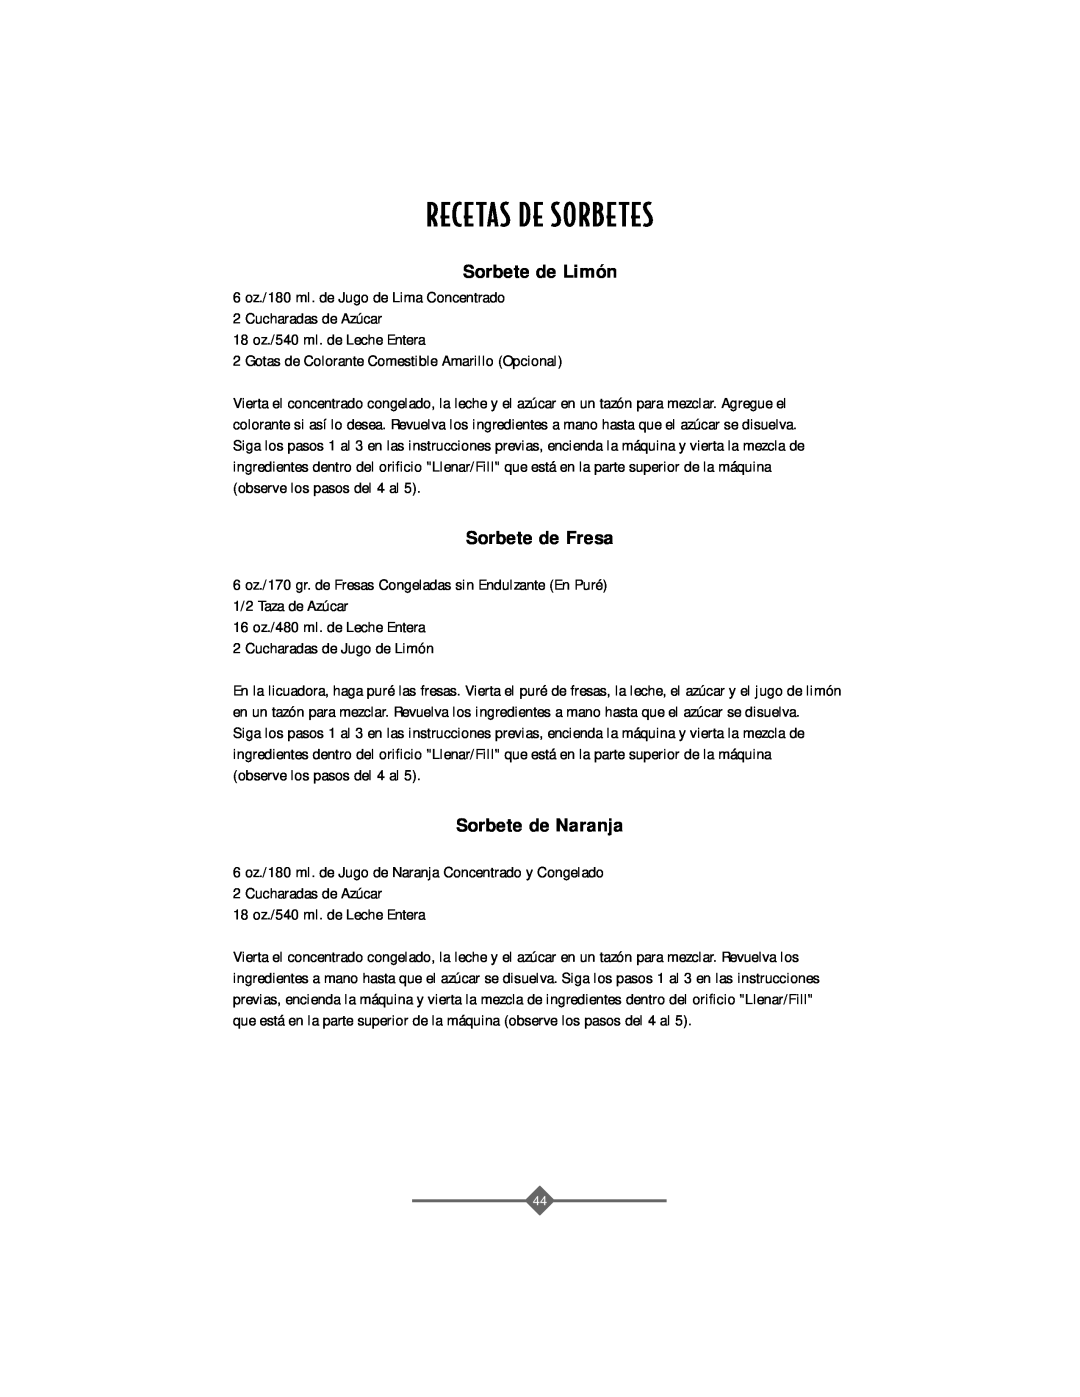 Sunbeam 4743, 4742 instruction manual Recetas De Sorbetes, Sorbete de Limón, Sorbete de Fresa, Sorbete de Naranja 